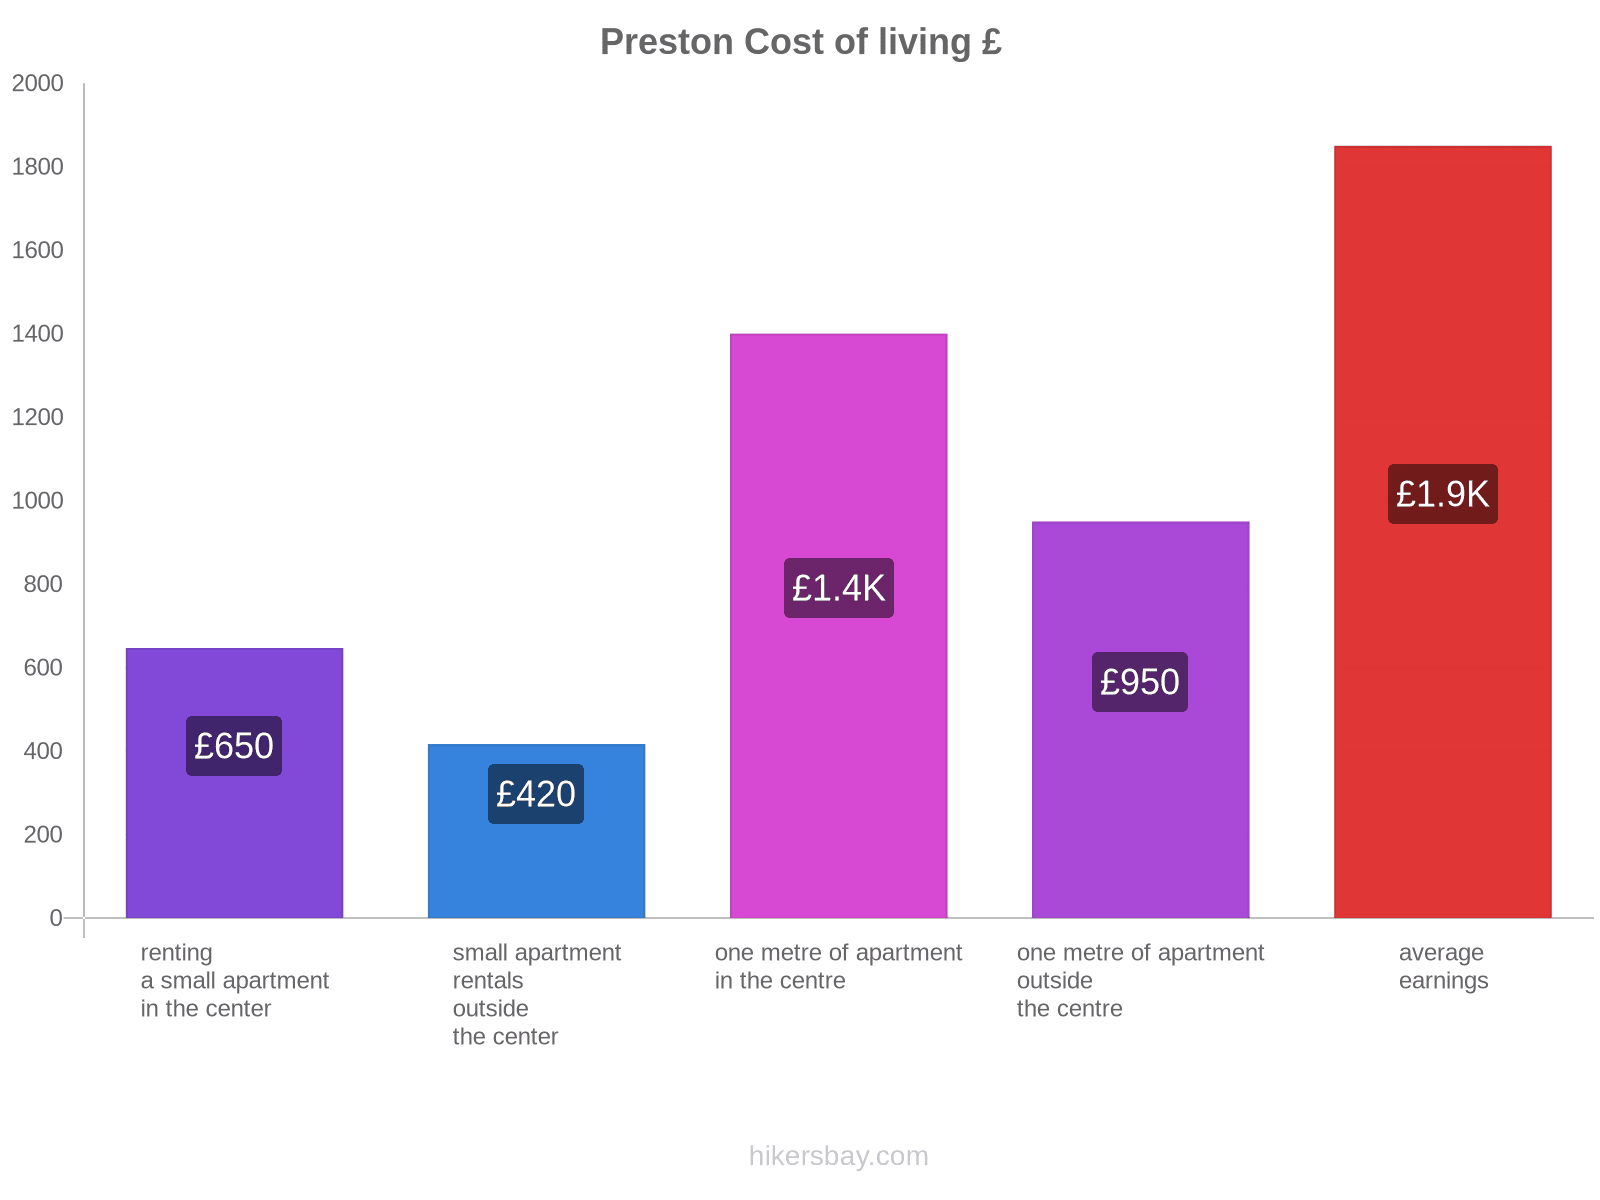 Preston cost of living hikersbay.com